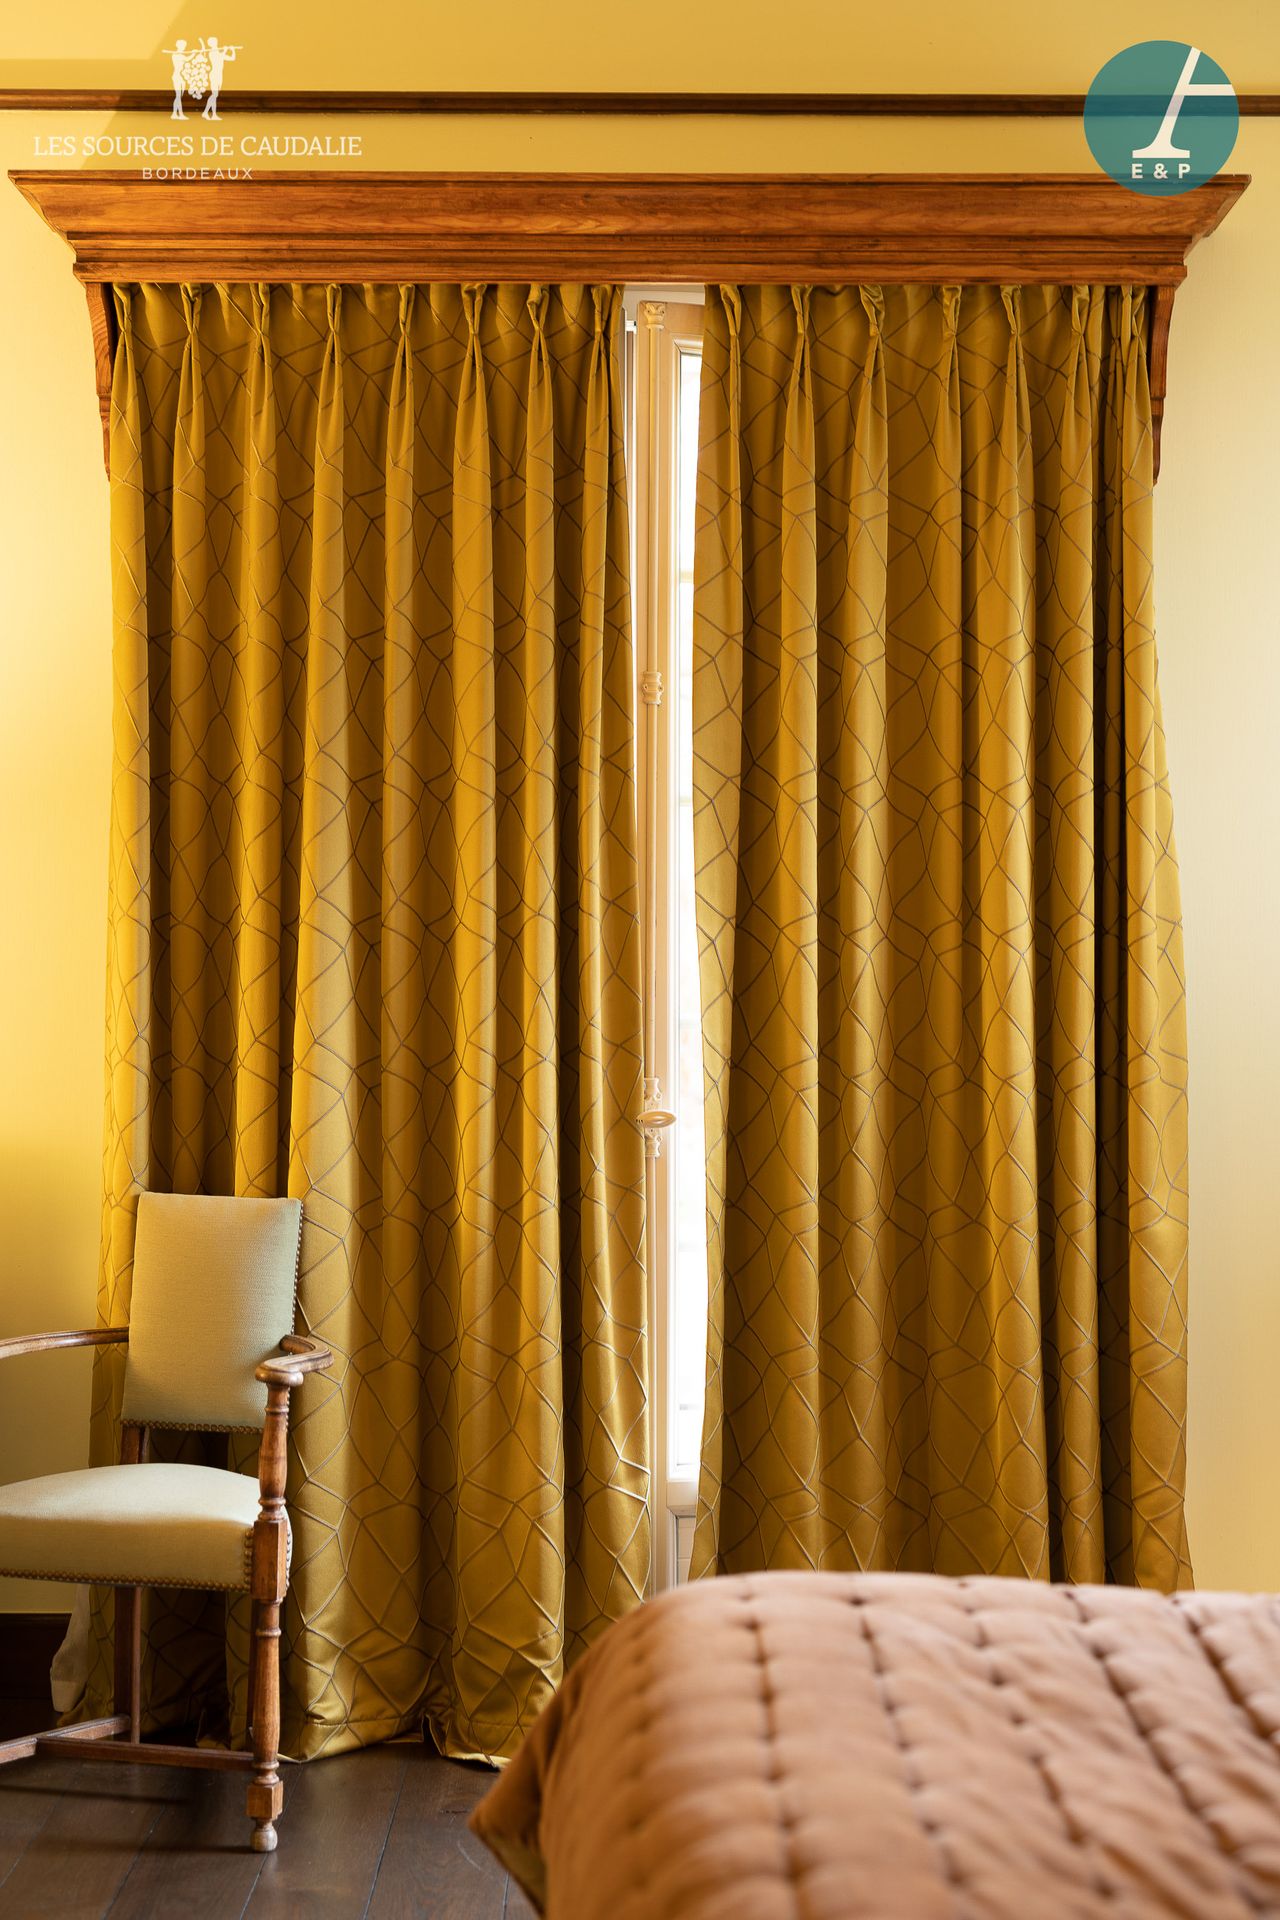 Null 来自1号房间的 "L'Etiquette"。

拍品包括一对窗帘和一个百叶窗，黄色织物，有交错图案，有遮光衬里。

高：250厘米 - 宽：100厘米&hellip;